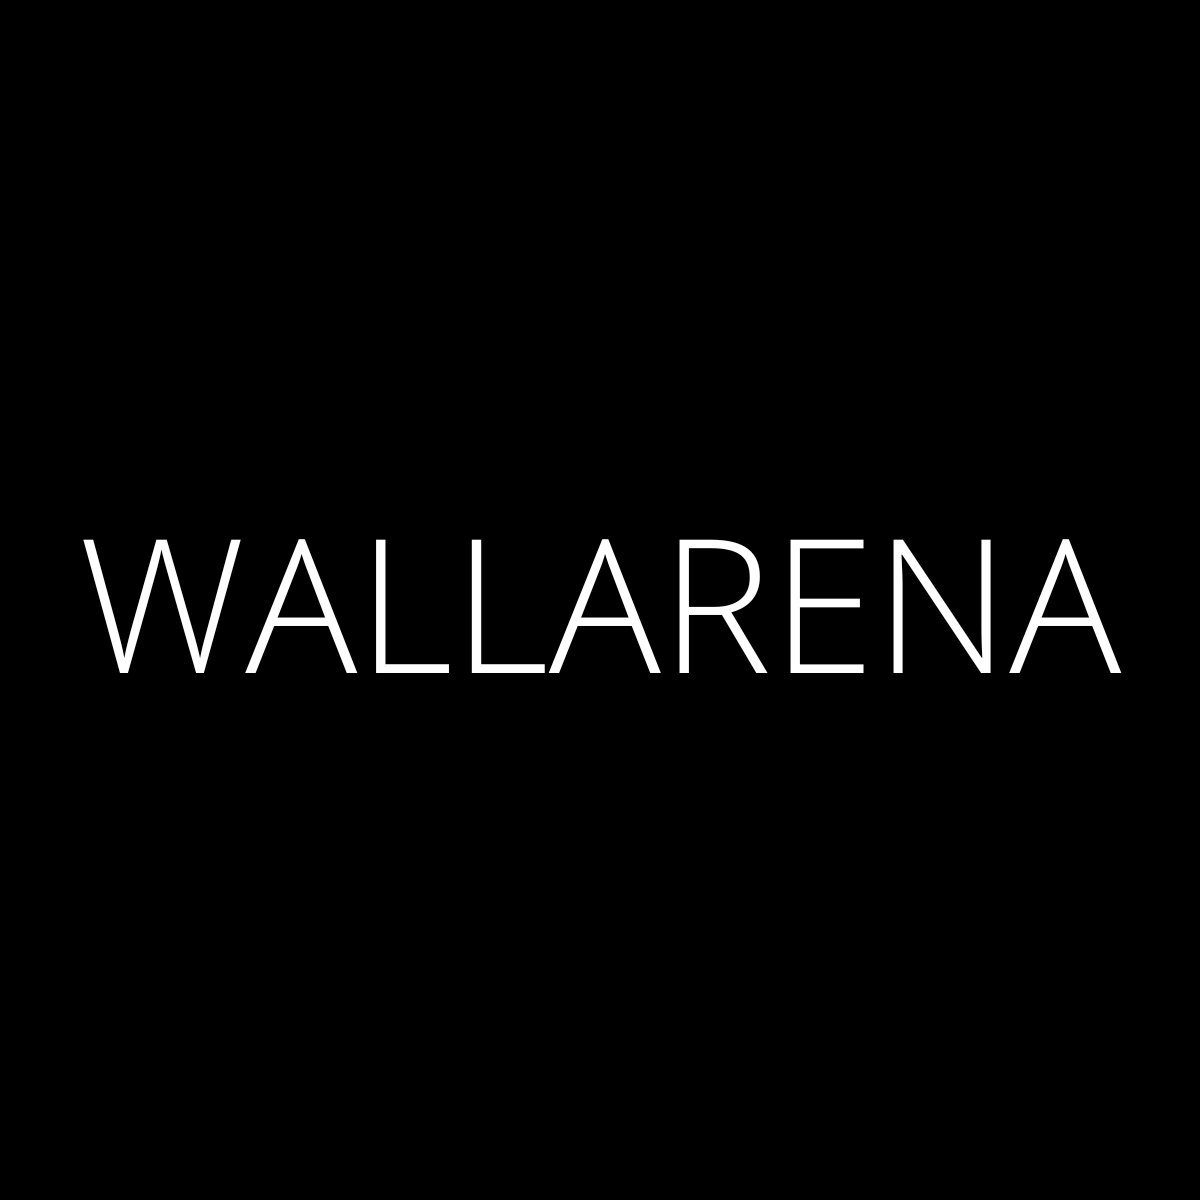 Wallarena